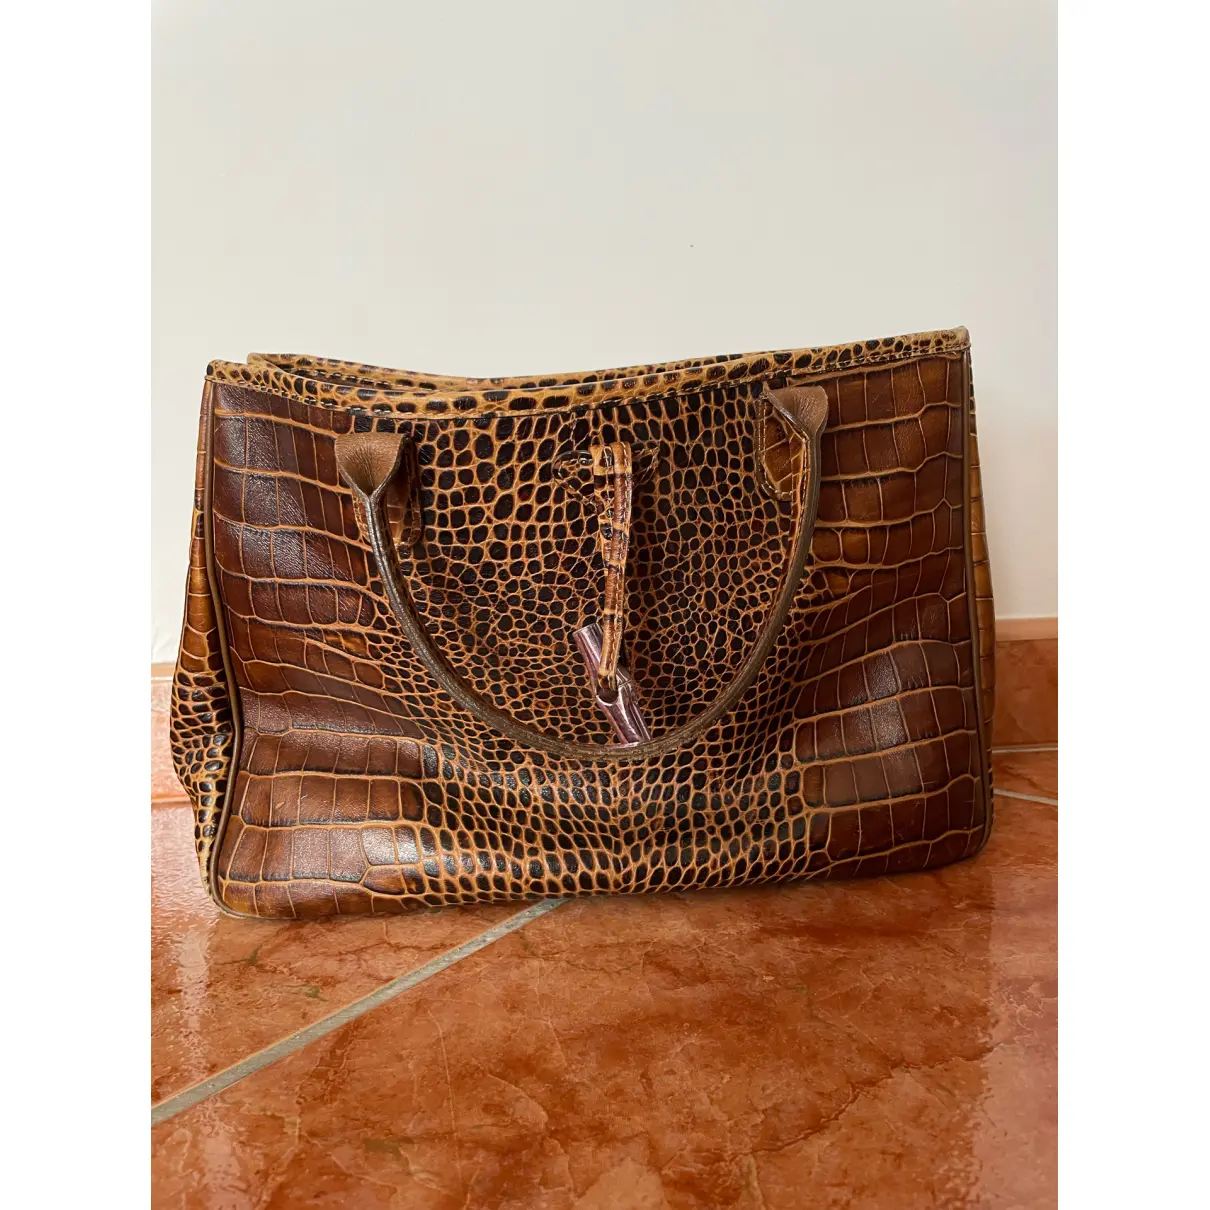 Buy Longchamp Roseau leather handbag online